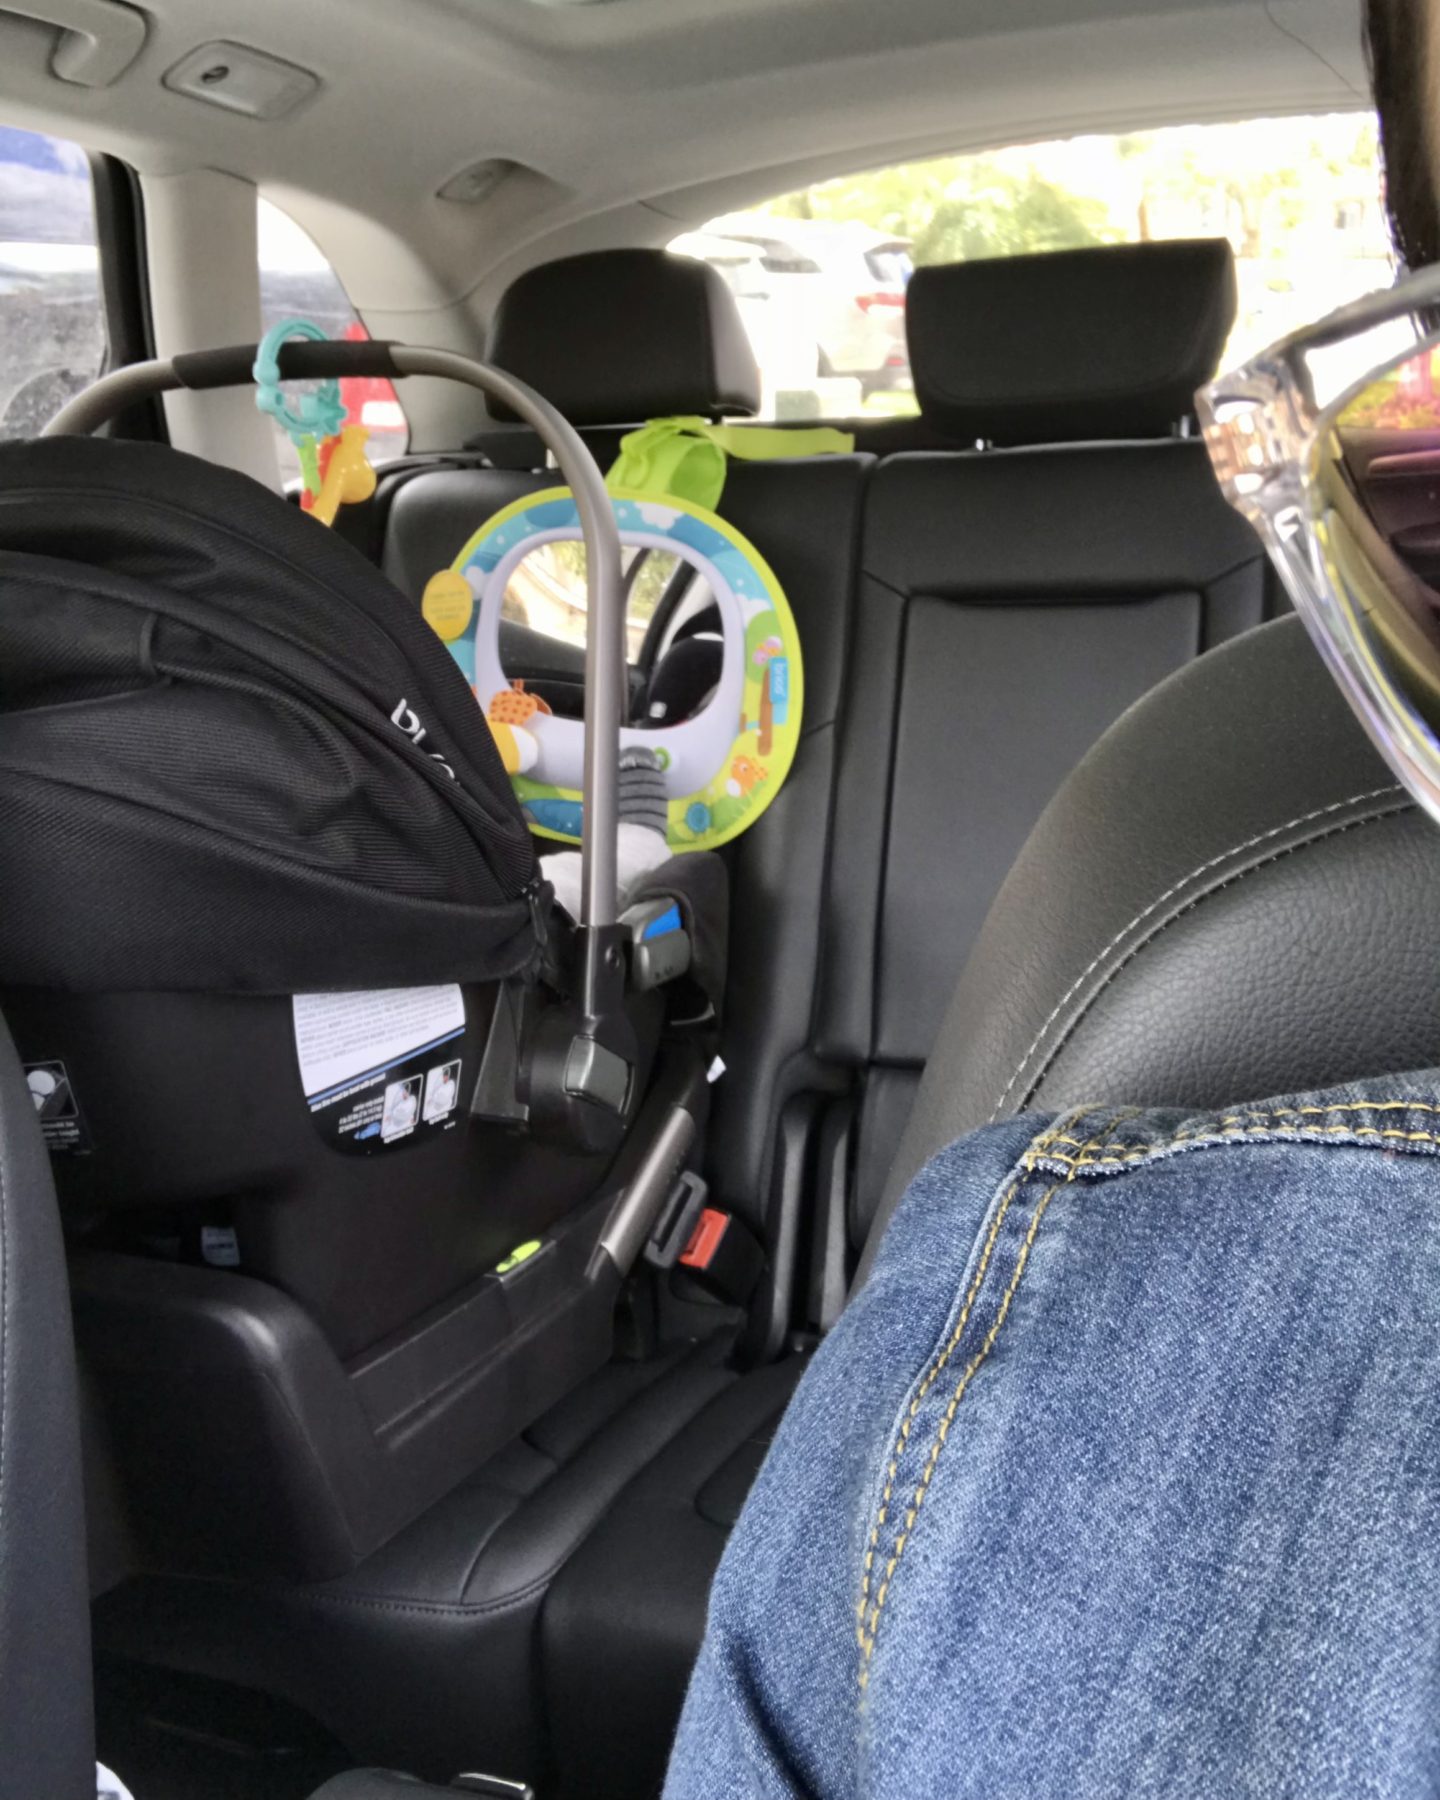 Nuna pipa car seat review